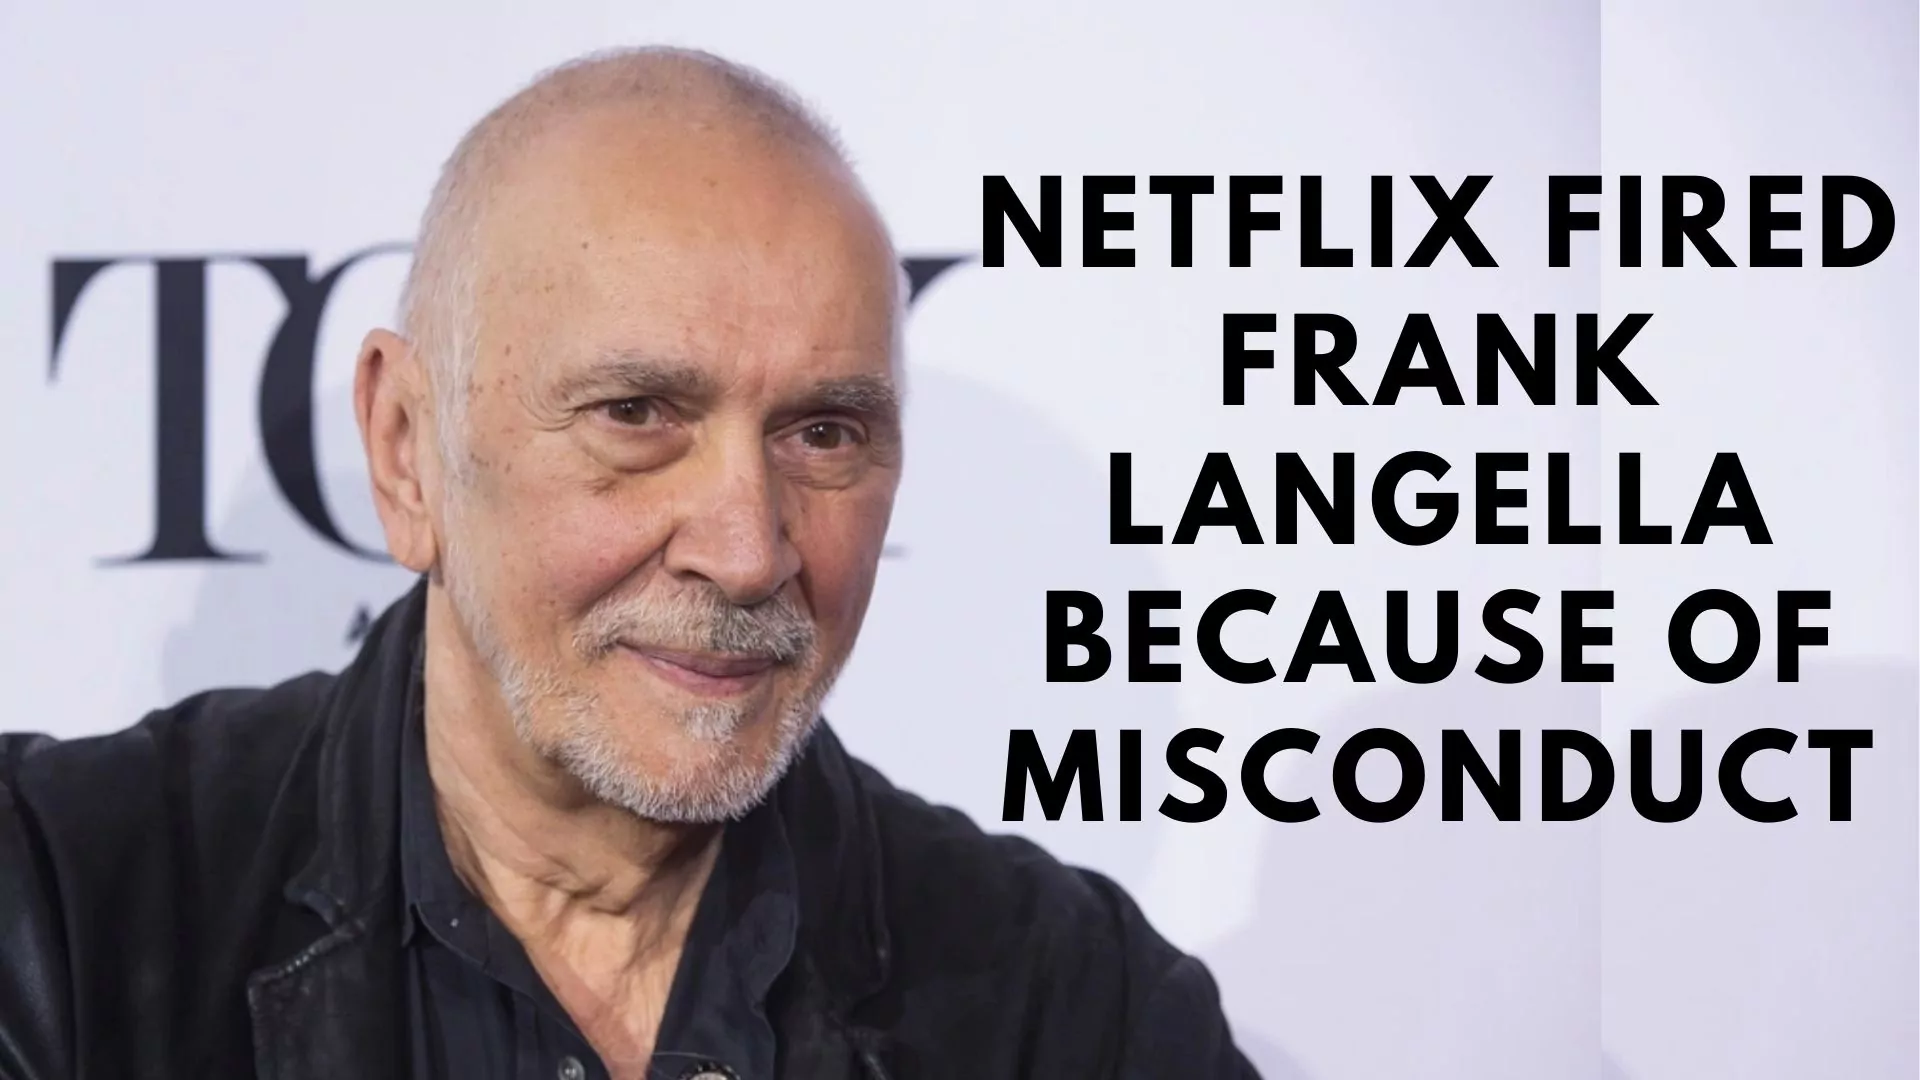 Netflix Fired Frank Langella Because of Misconduct